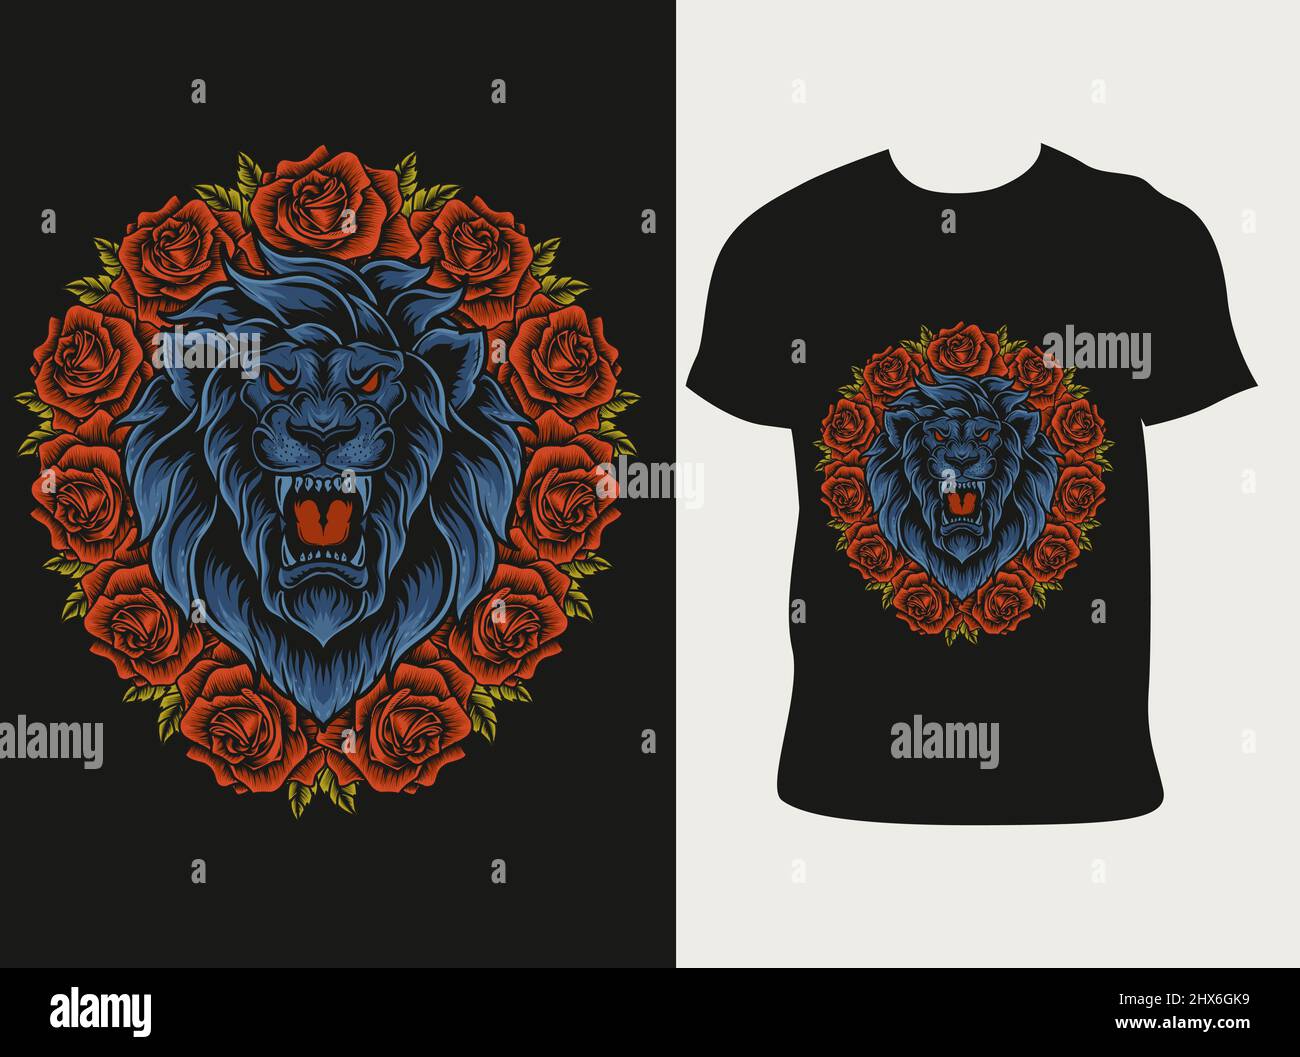 illustration lion head with rose flower on t shirt design Stock Vector